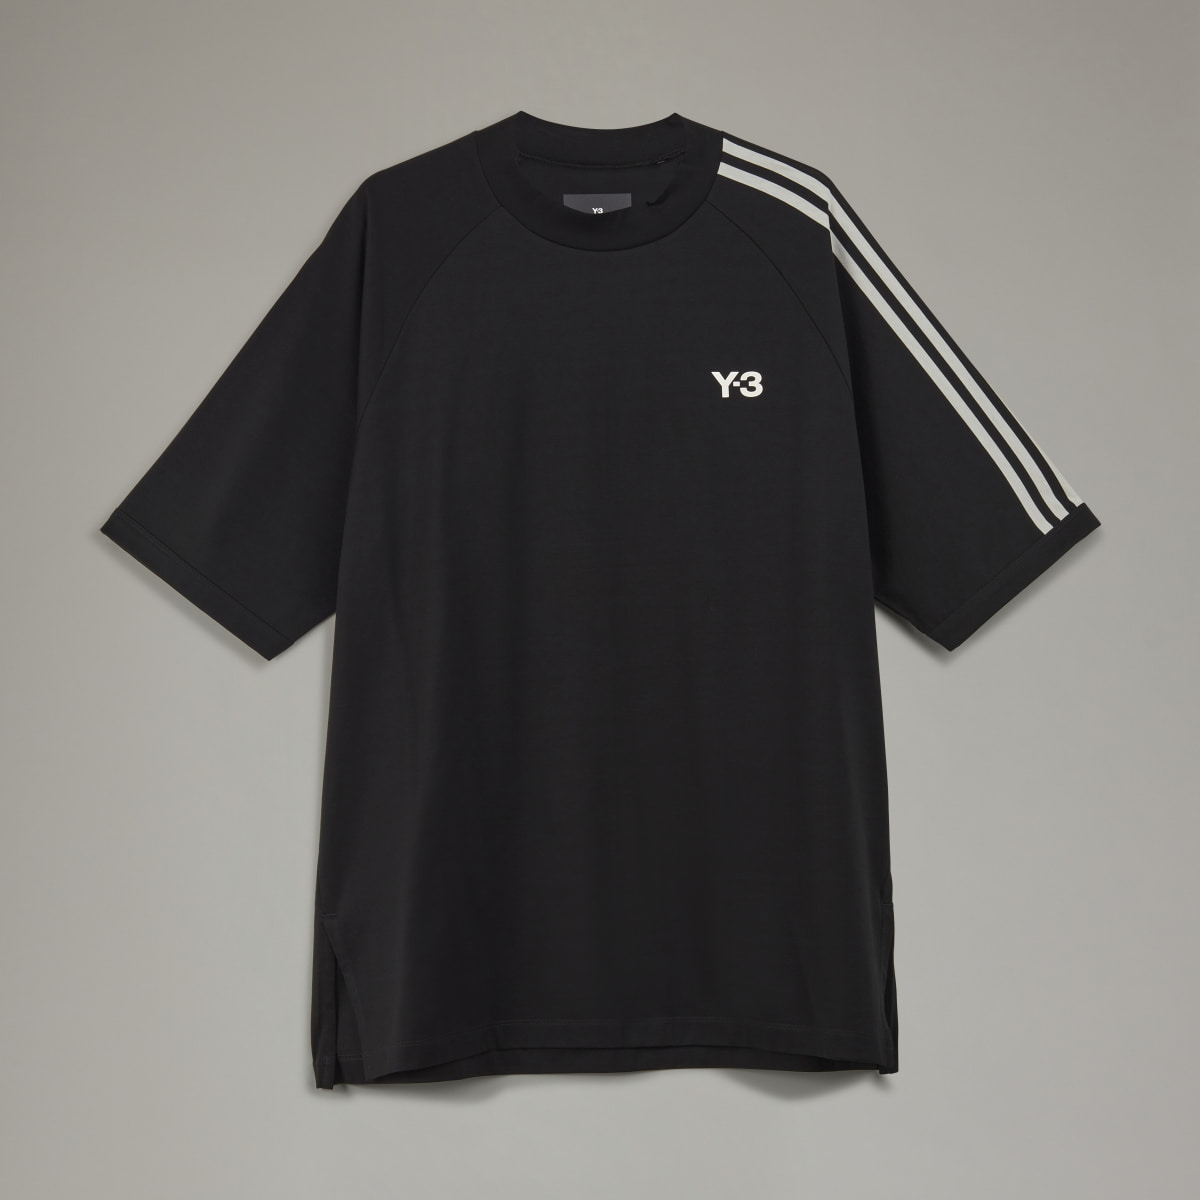 Adidas Y-3 3-Stripes Short Sleeve Tee. 5